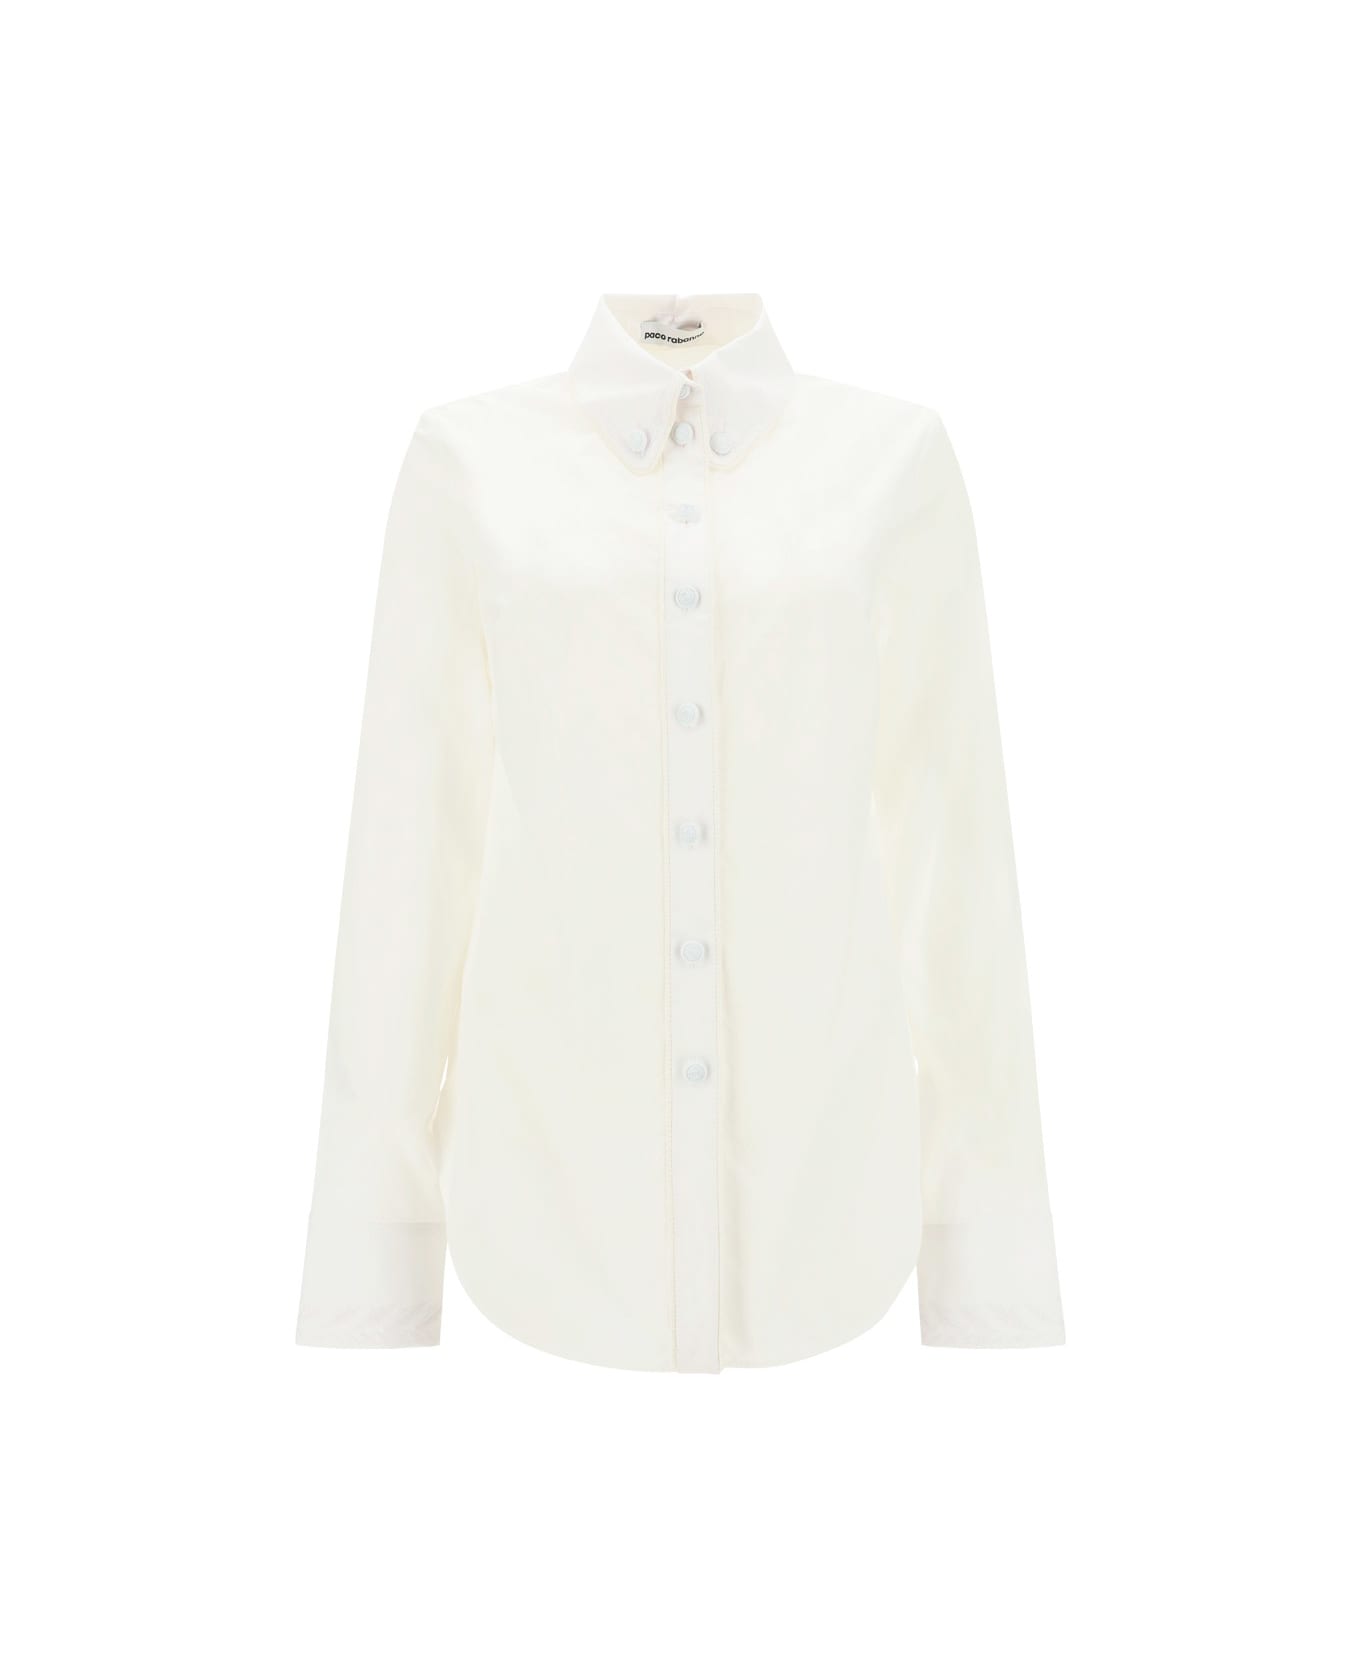 Paco Rabanne Shirt - White/white